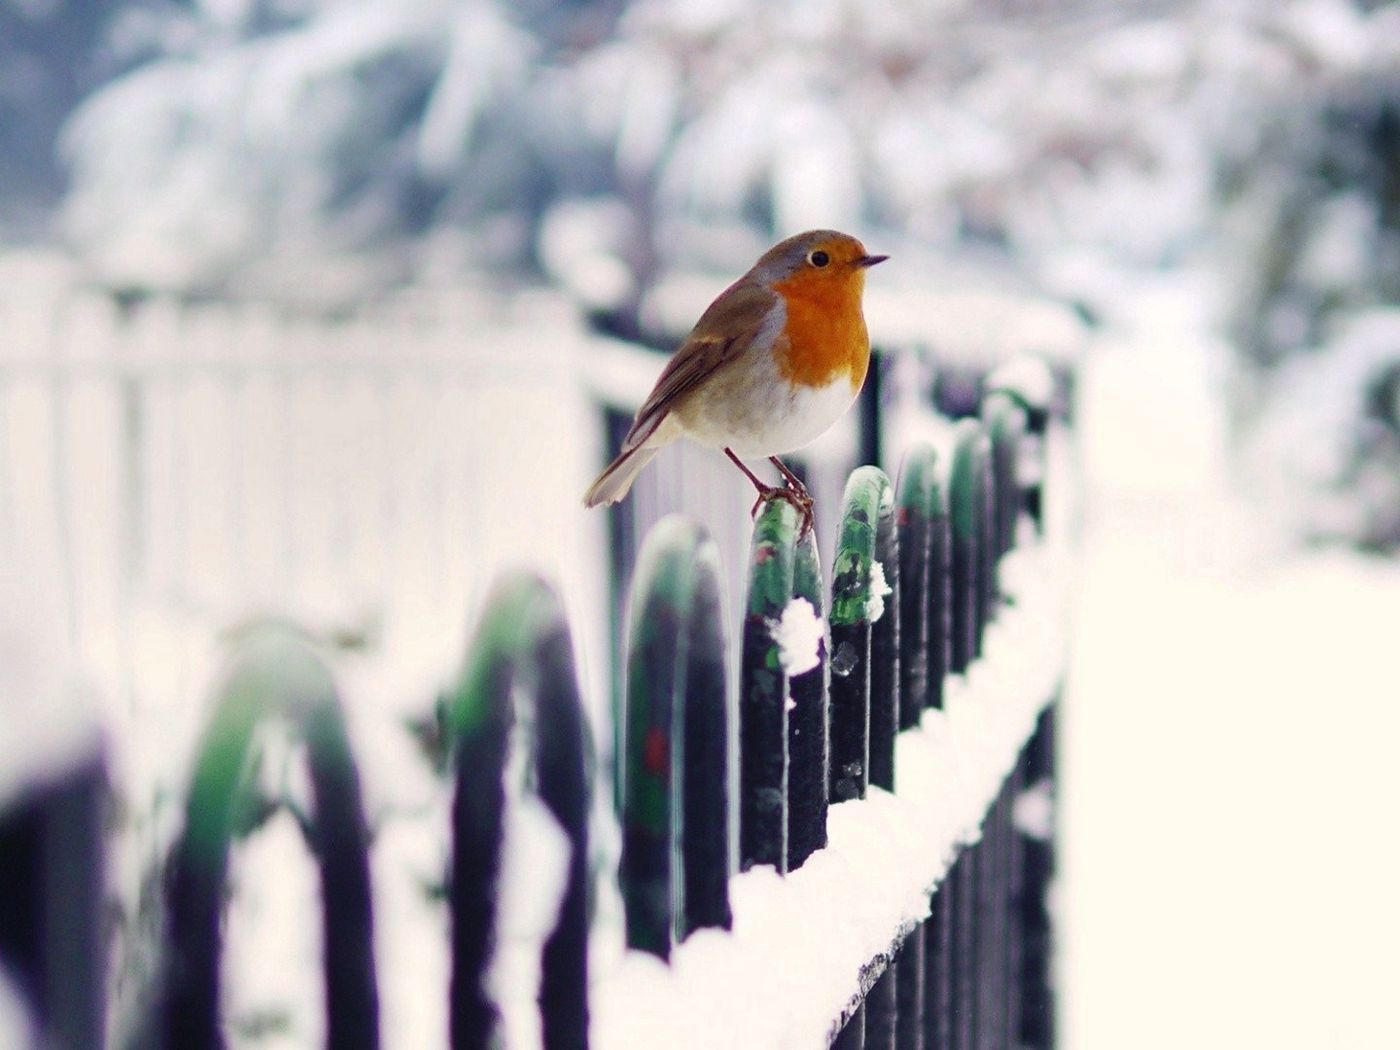 Download wallpaper 1400x1050 birds, snow, fence, winter standard 4:3 HD background